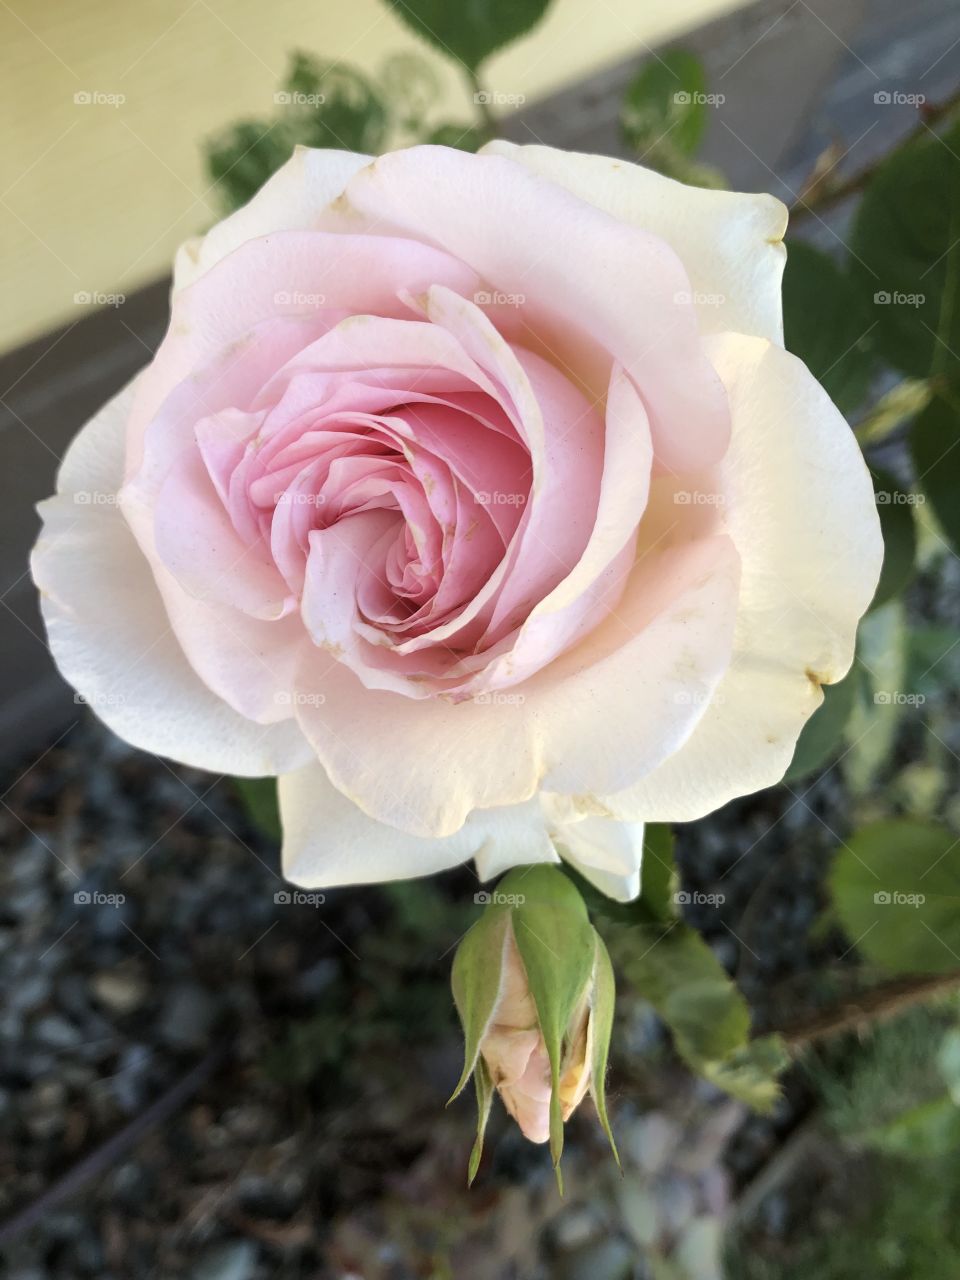 The innocent rose